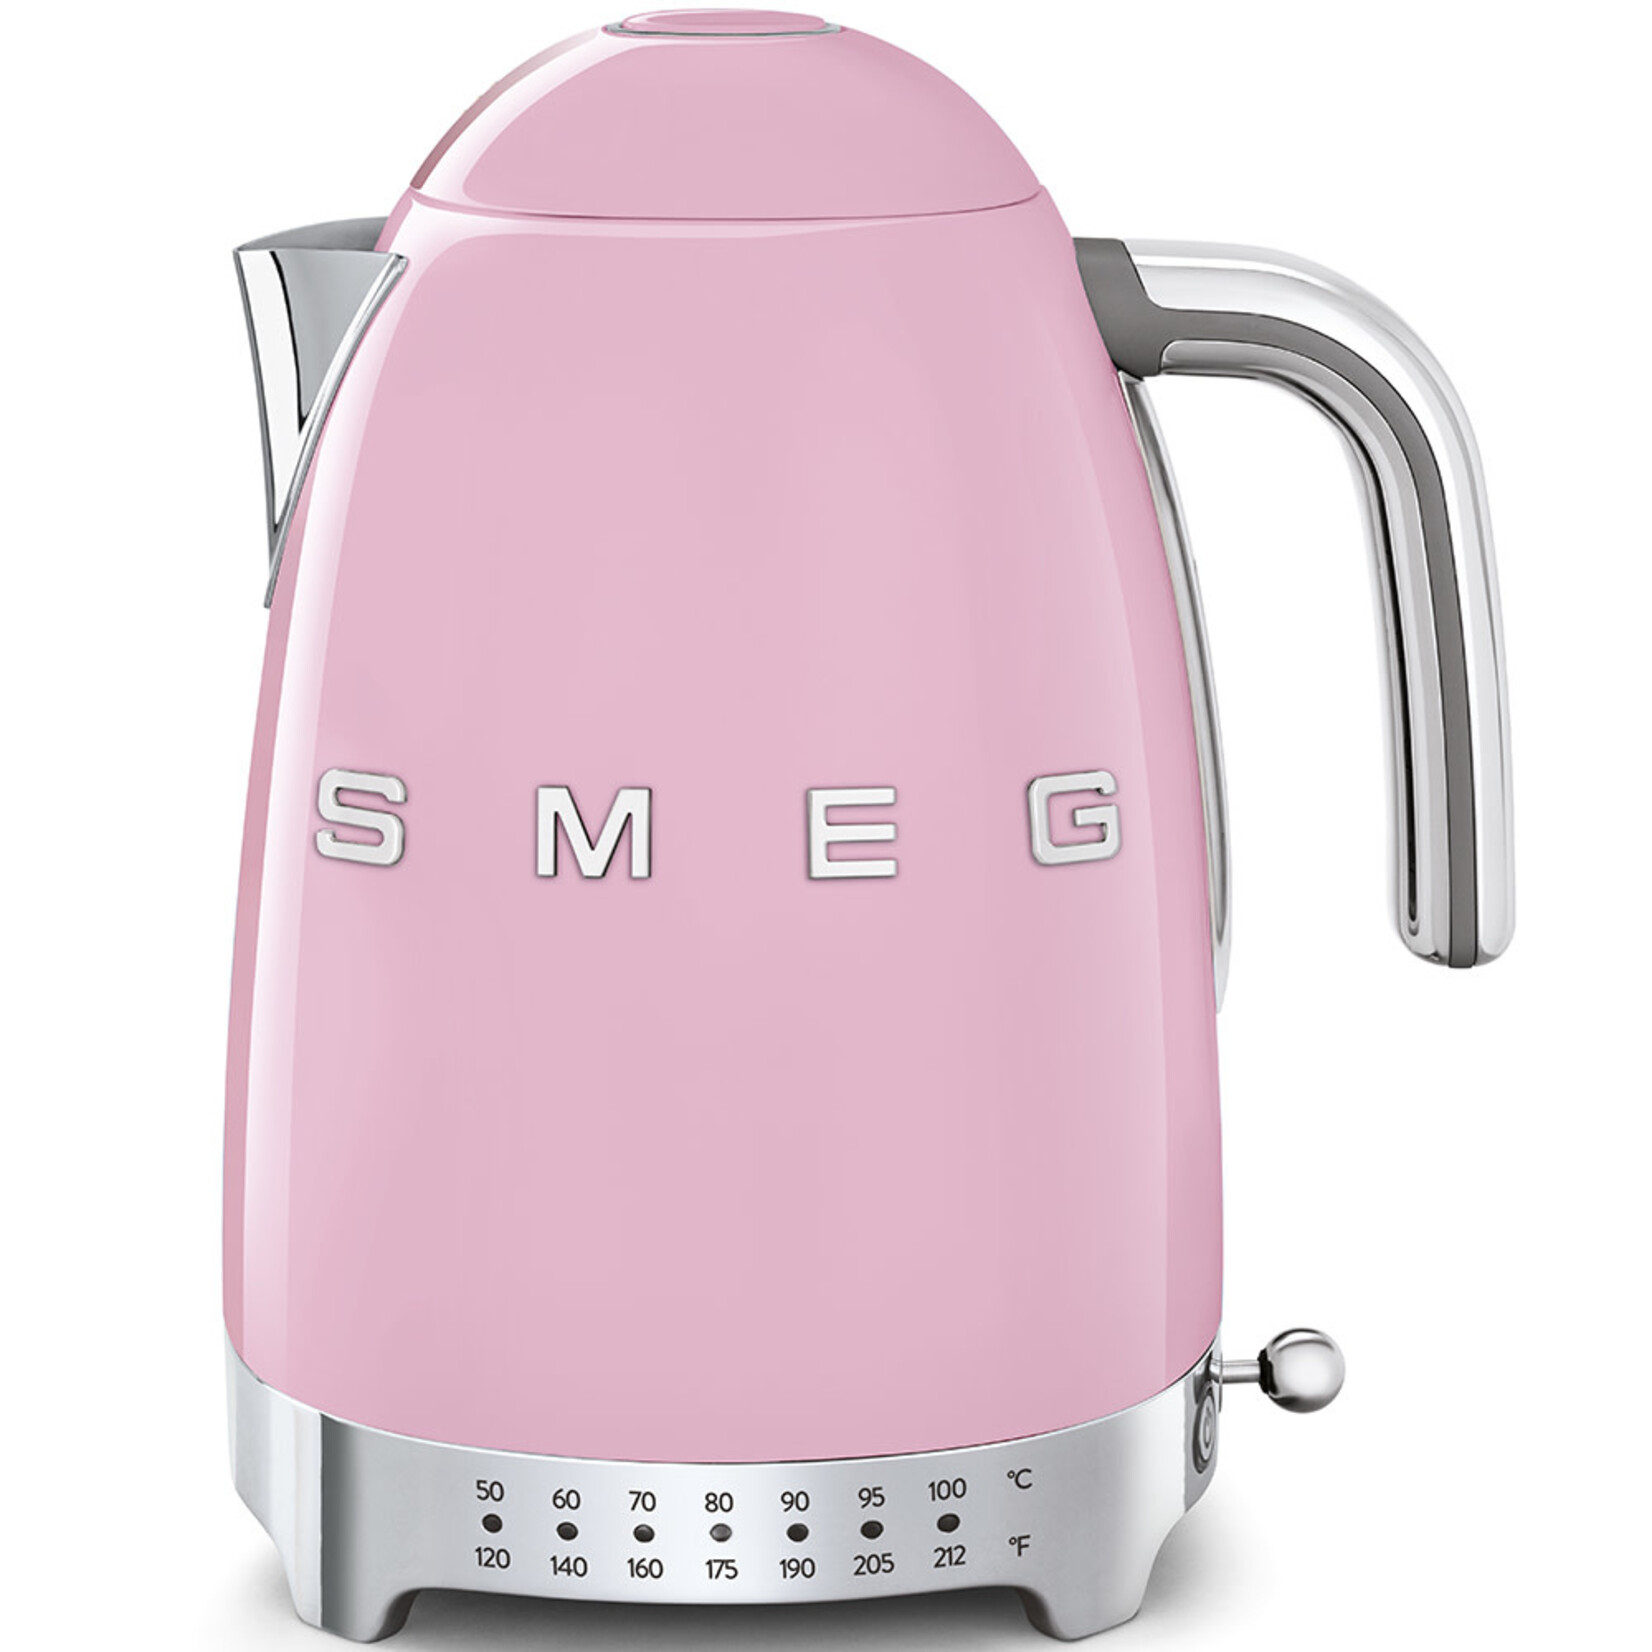 SMEG SMEG 50's Retro Style Aesthetic Variable 7 Cup Temperature Kettle